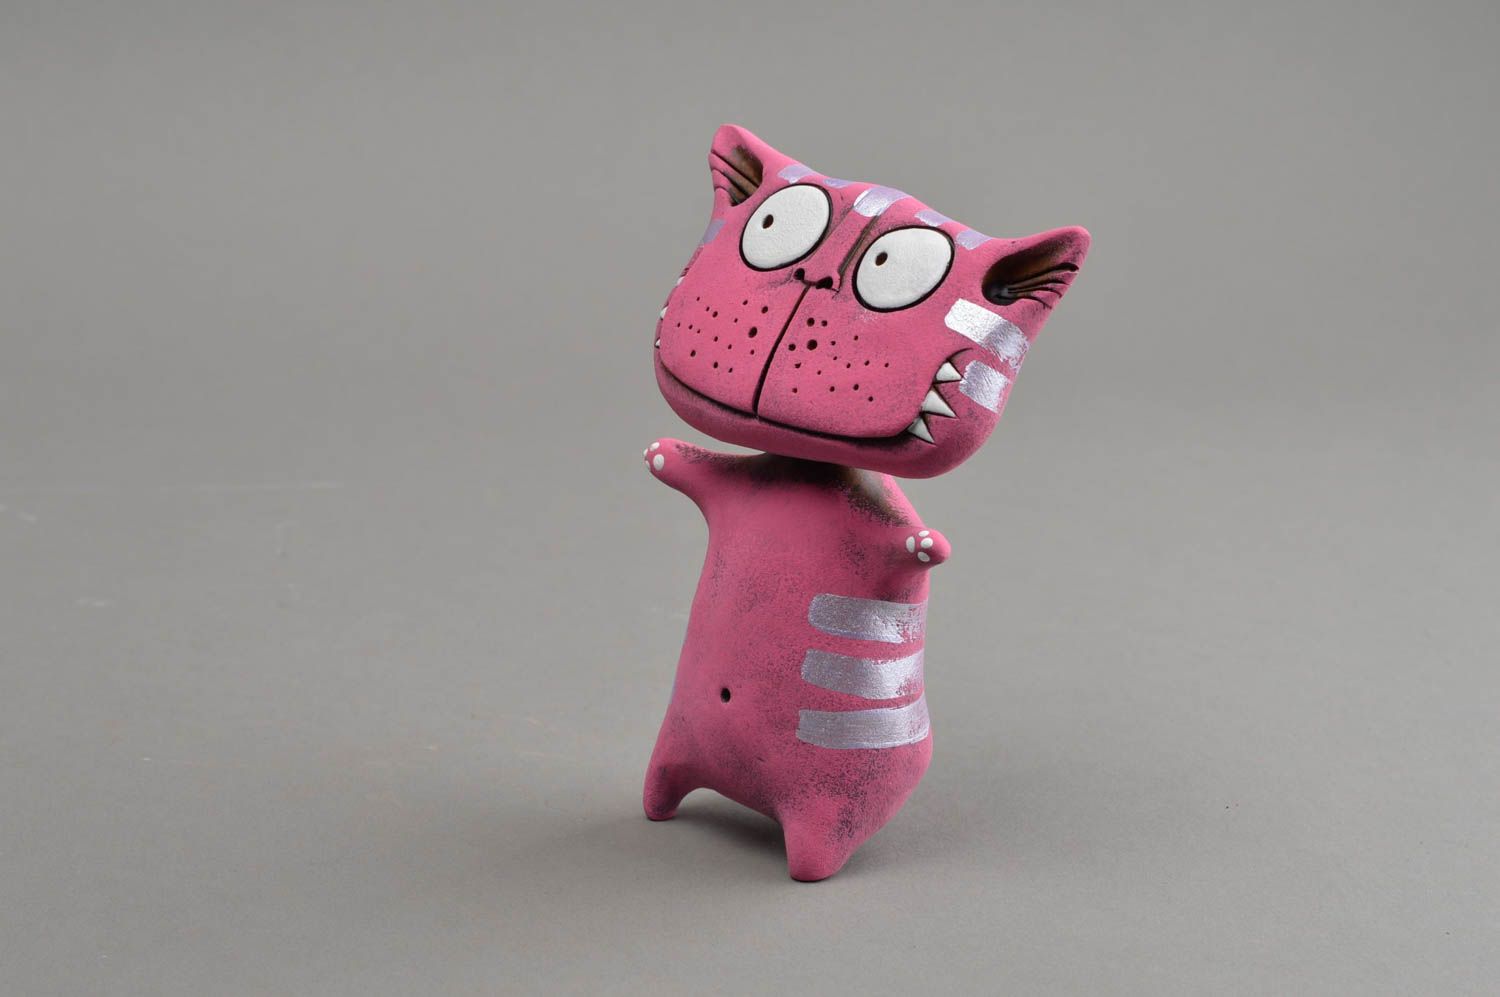 Keramische Statuette Katze handmade Souvenir interessant bemalt einzigartig toll foto 3